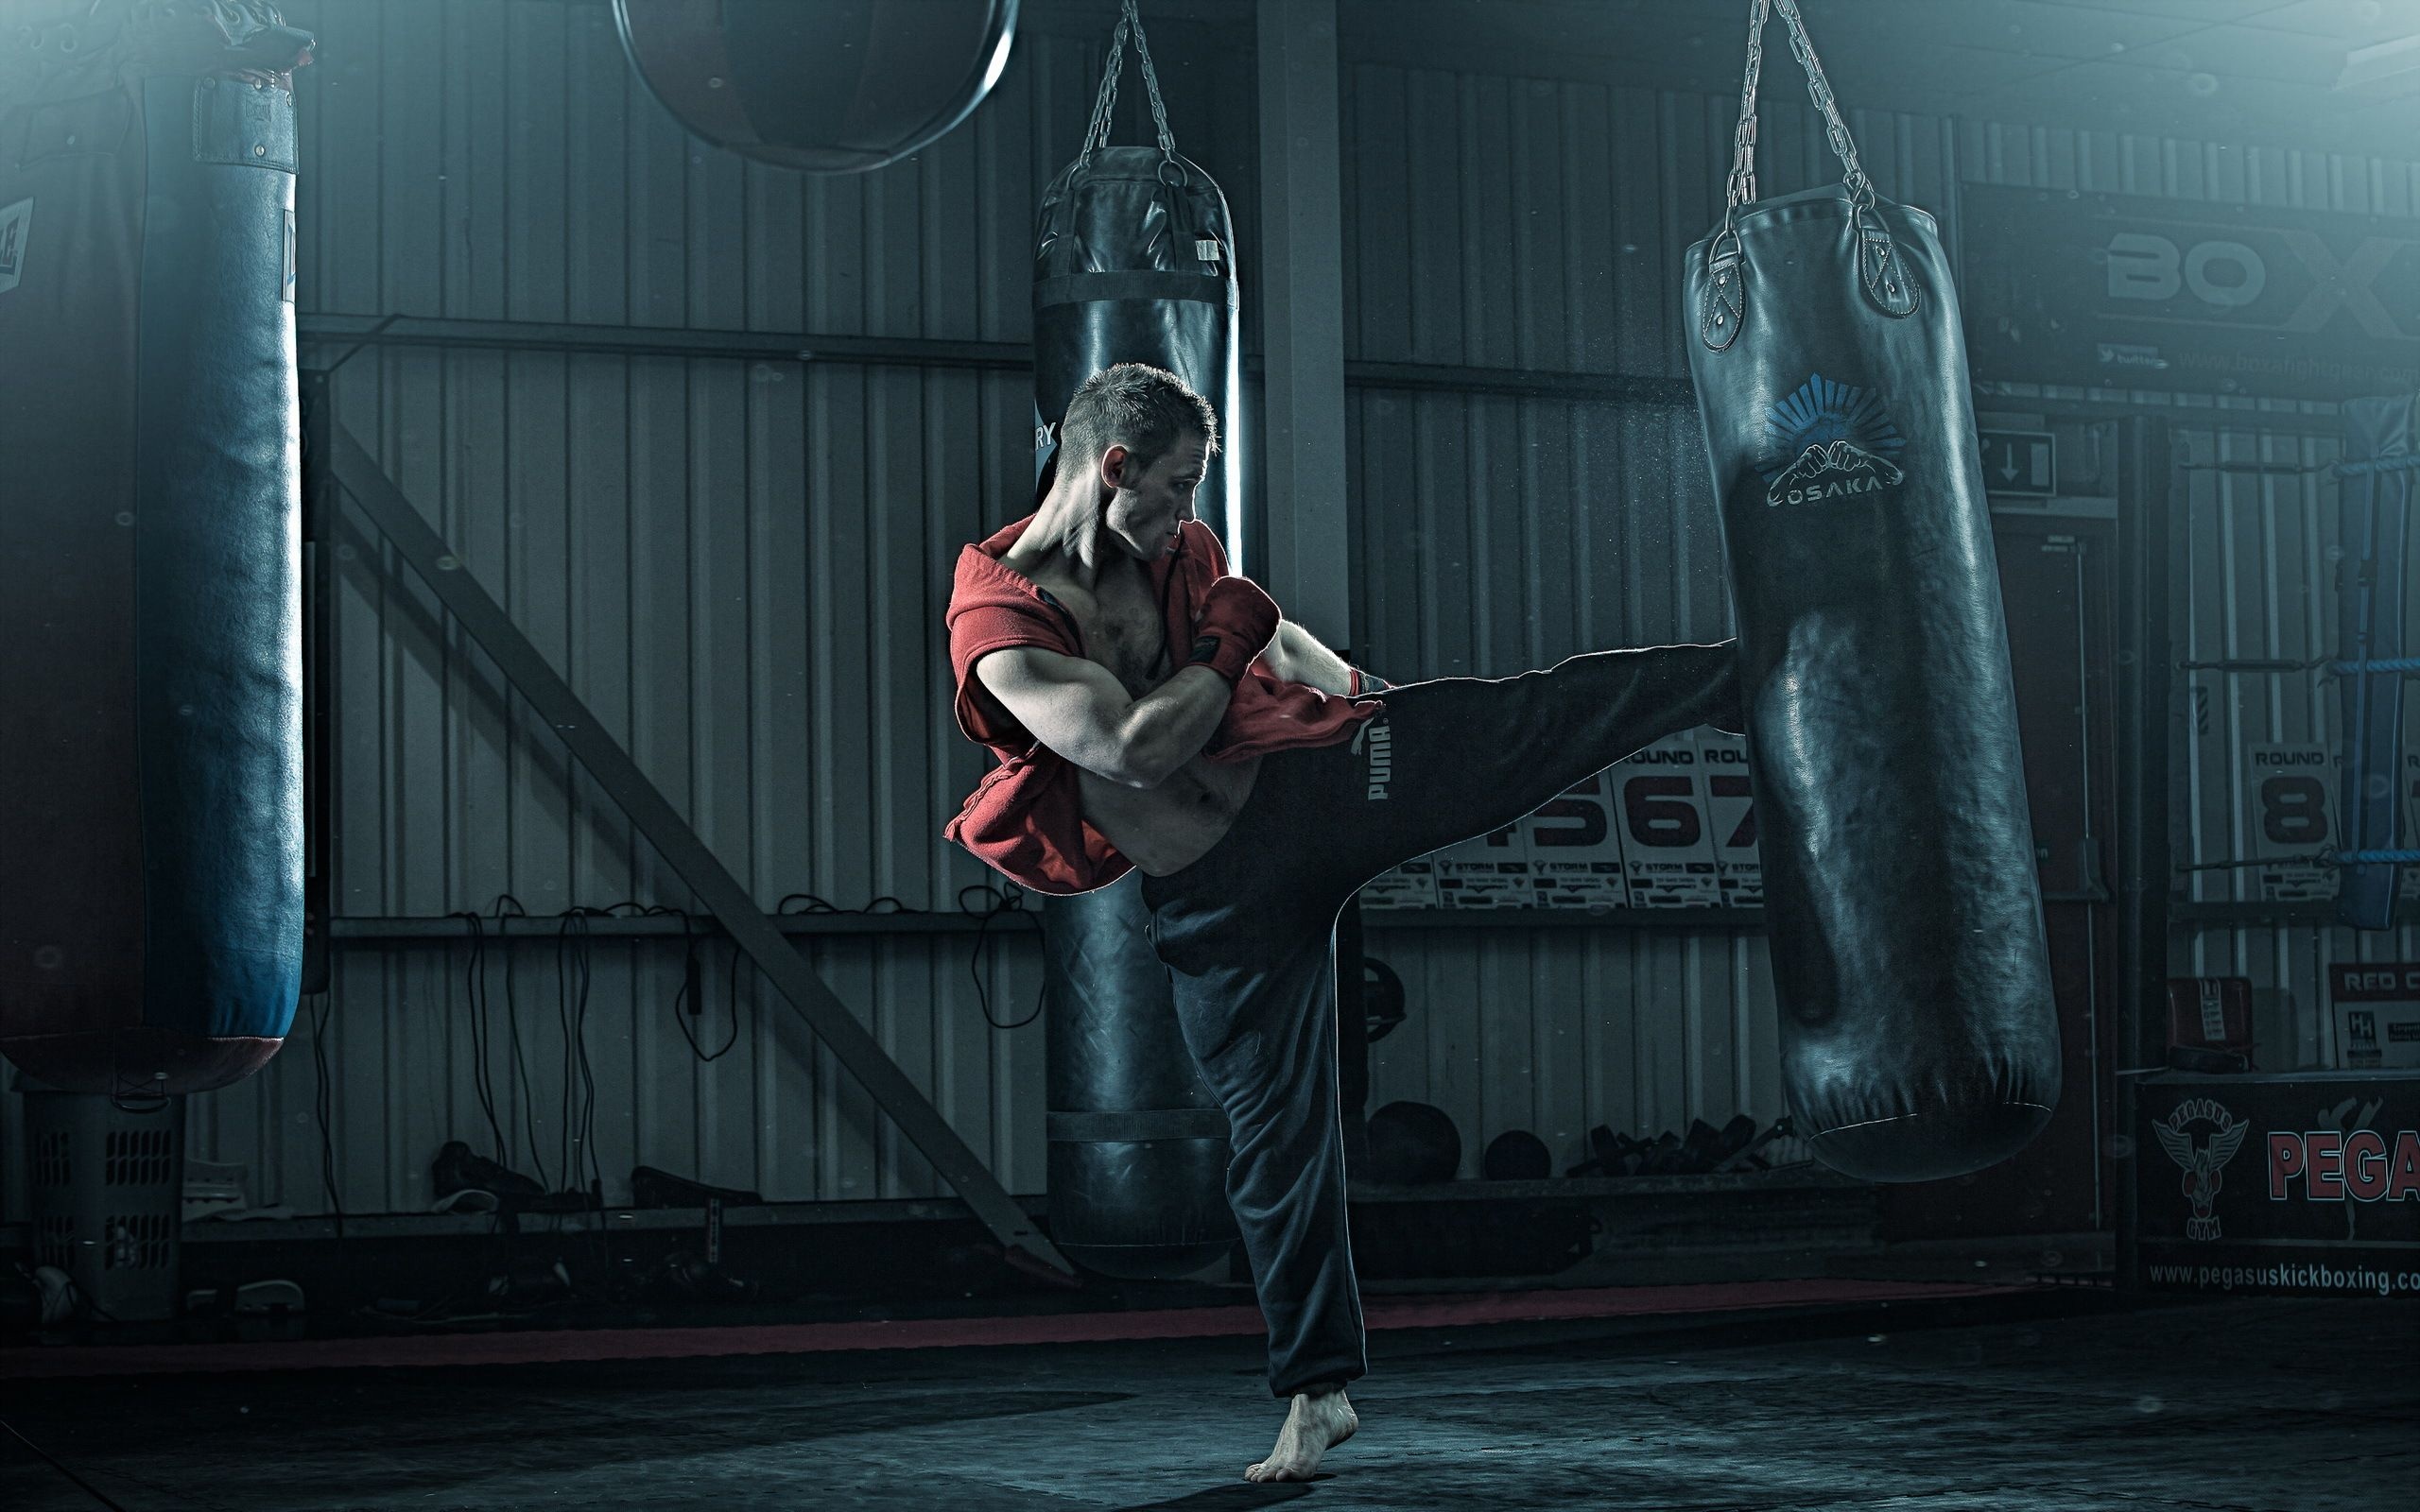 Combat Sports: Kickboxing, Kicking and Punching, World Kickboxing Association, Heavy Bag. 2560x1600 HD Wallpaper.